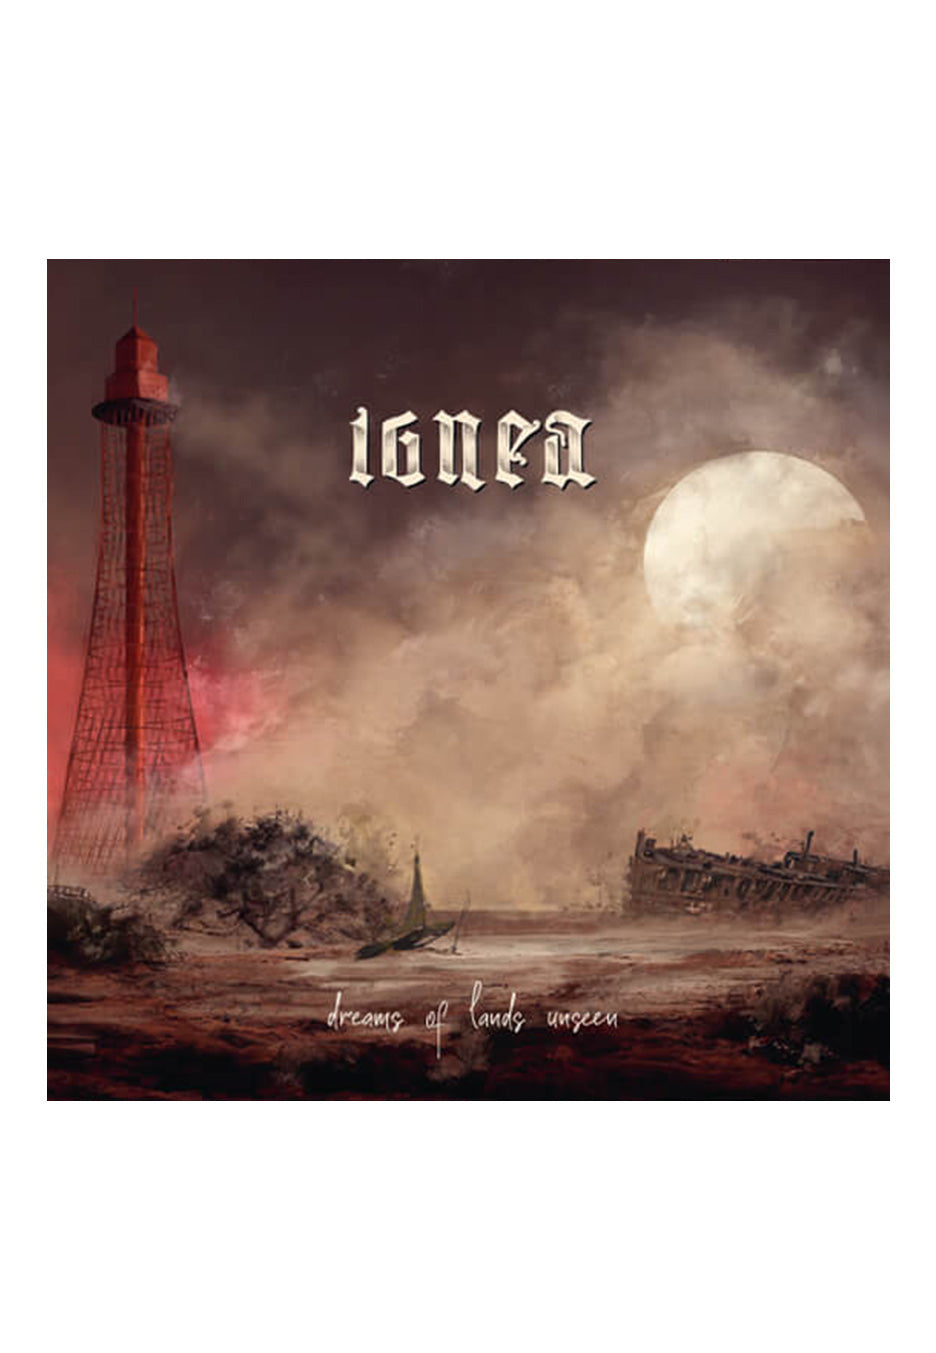 Ignea - Dreams Of Lands Unseen Ltd. Cream - Colored Vinyl